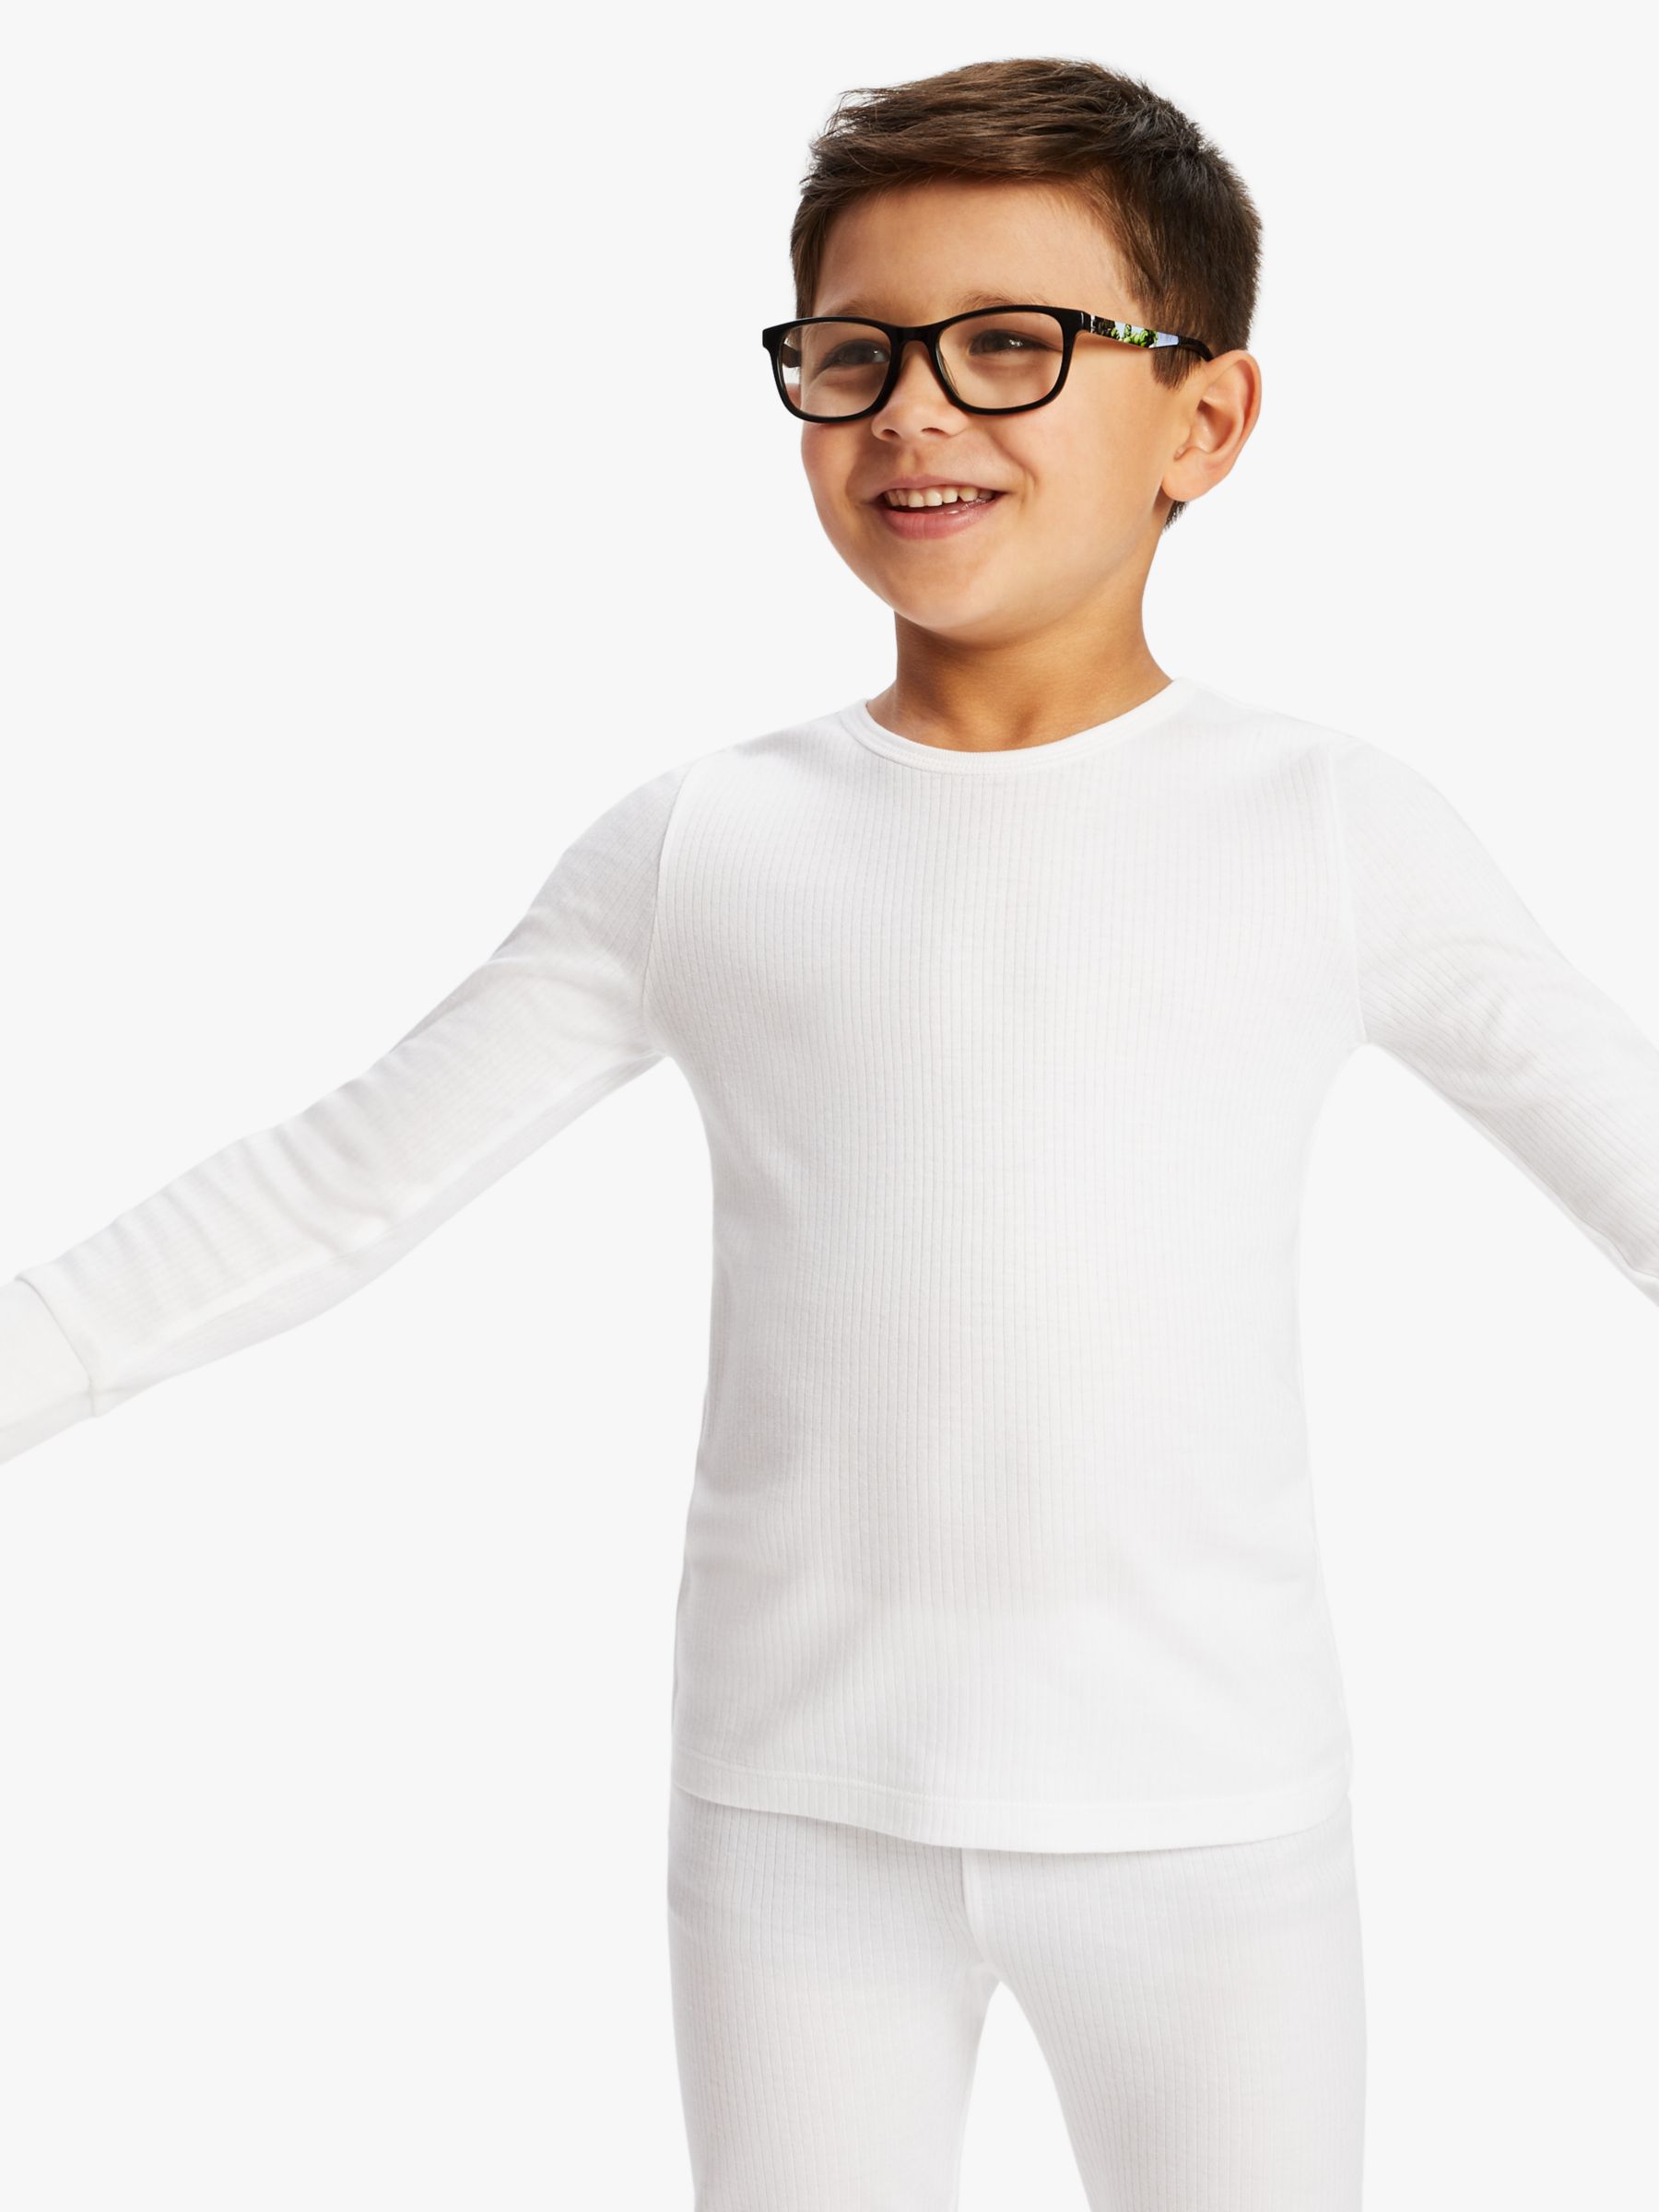 John Lewis Kids' Thermal Long Sleeve Top, Pack of 2, White